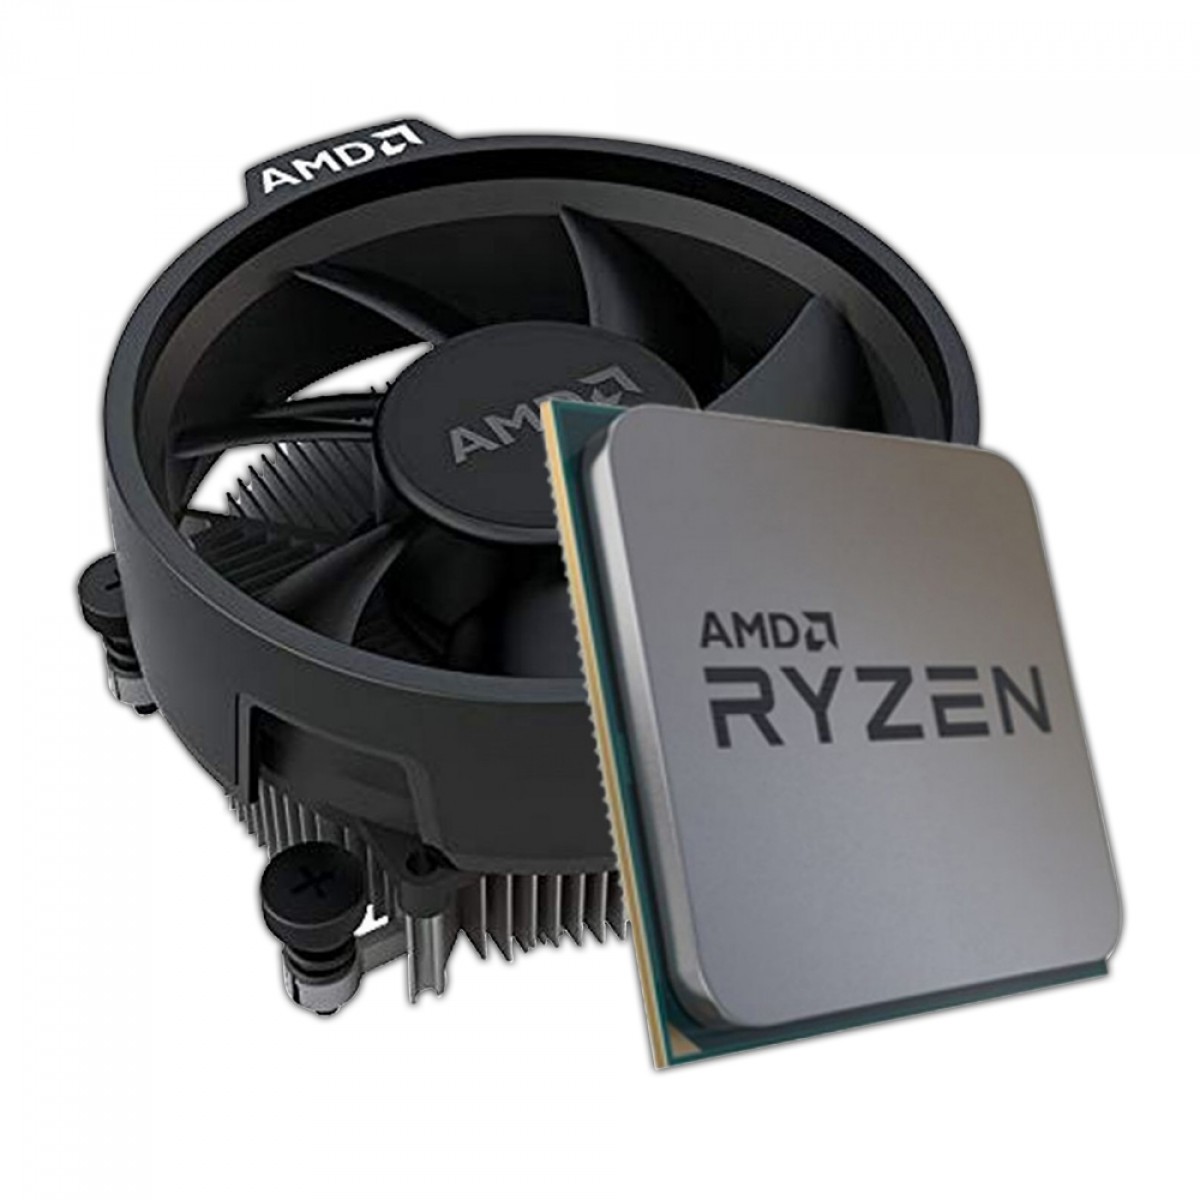 Kit Upgrade Placa Mãe ASRock B450M Steel Legend + Processador AMD Ryzen 5 3400G 3.7GHz + Memória 8GB DDR4 3000MHz